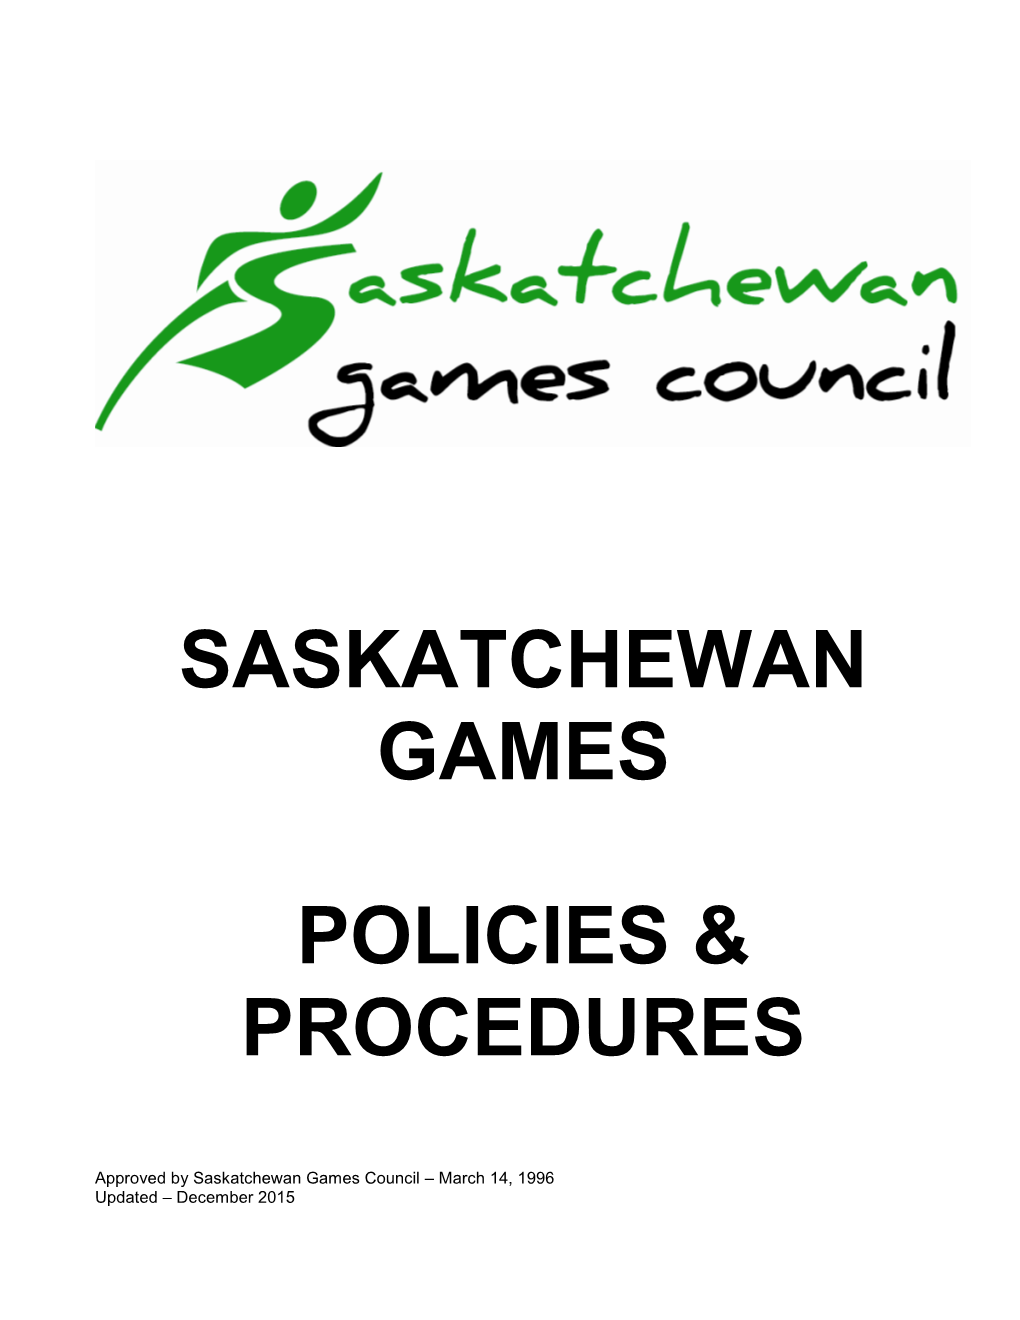 History of the Saskatchewan Games